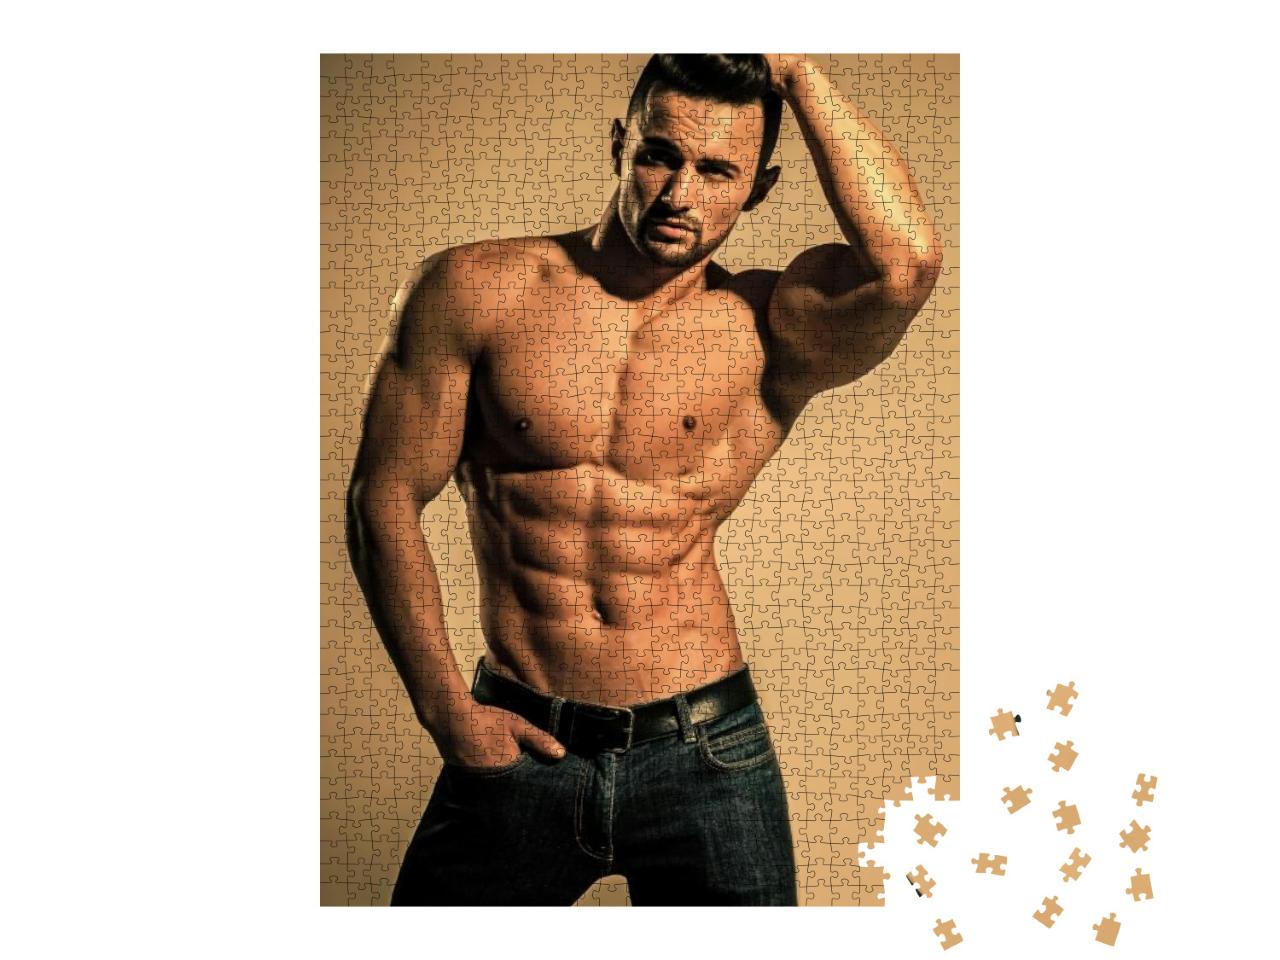 Puzzle 1000 Teile „Bodybuilder mit nacktem Oberkörper in Jeans“